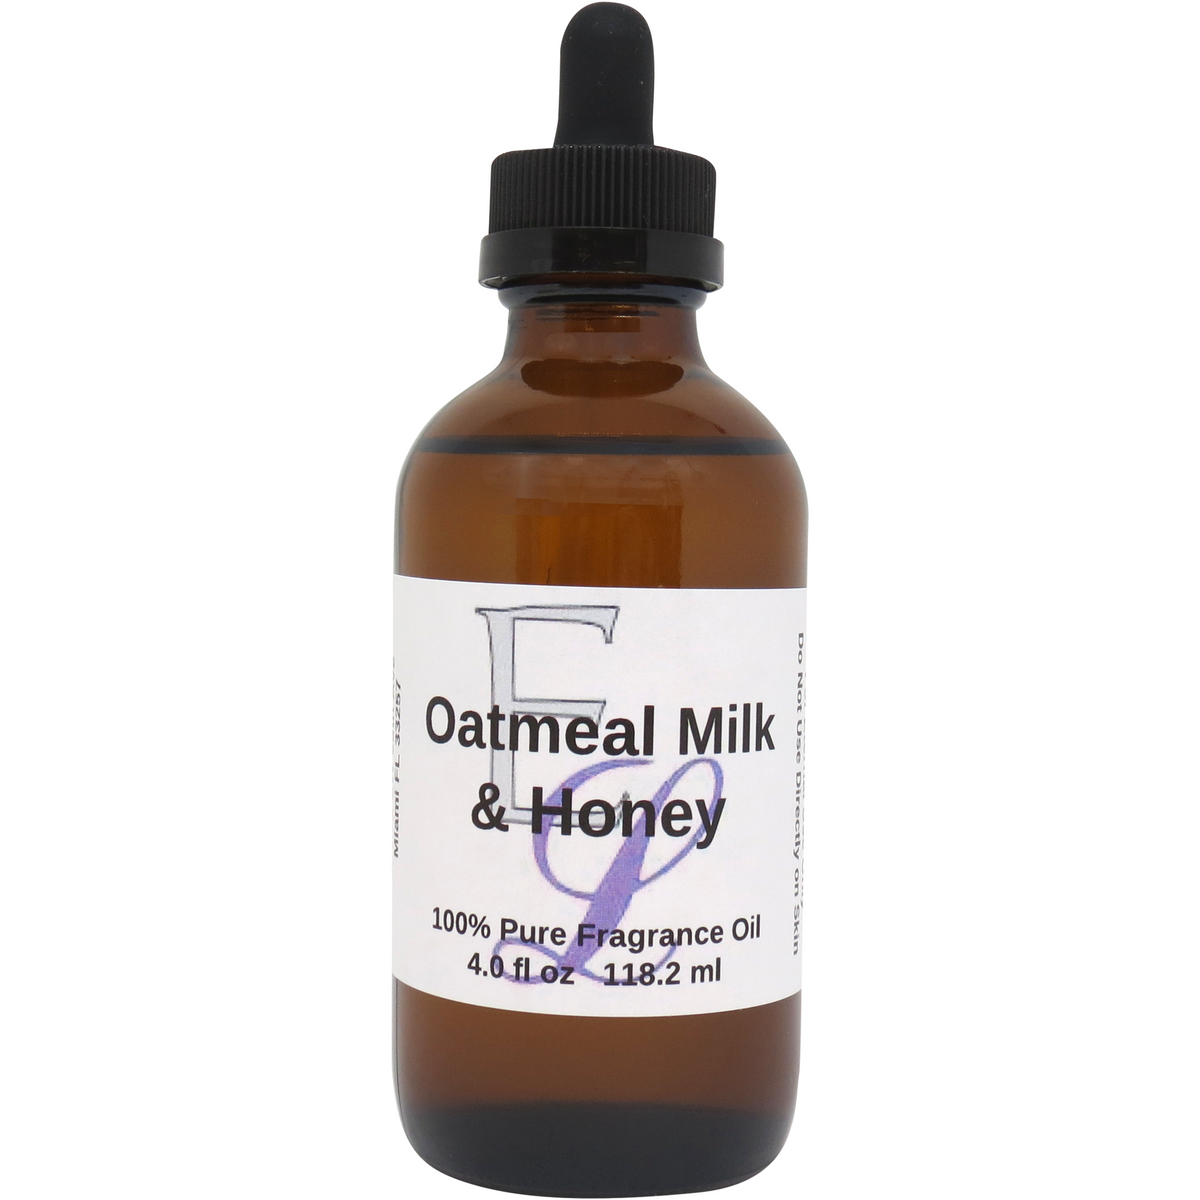 Oatmeal Milk and Honey Fragrance Oil